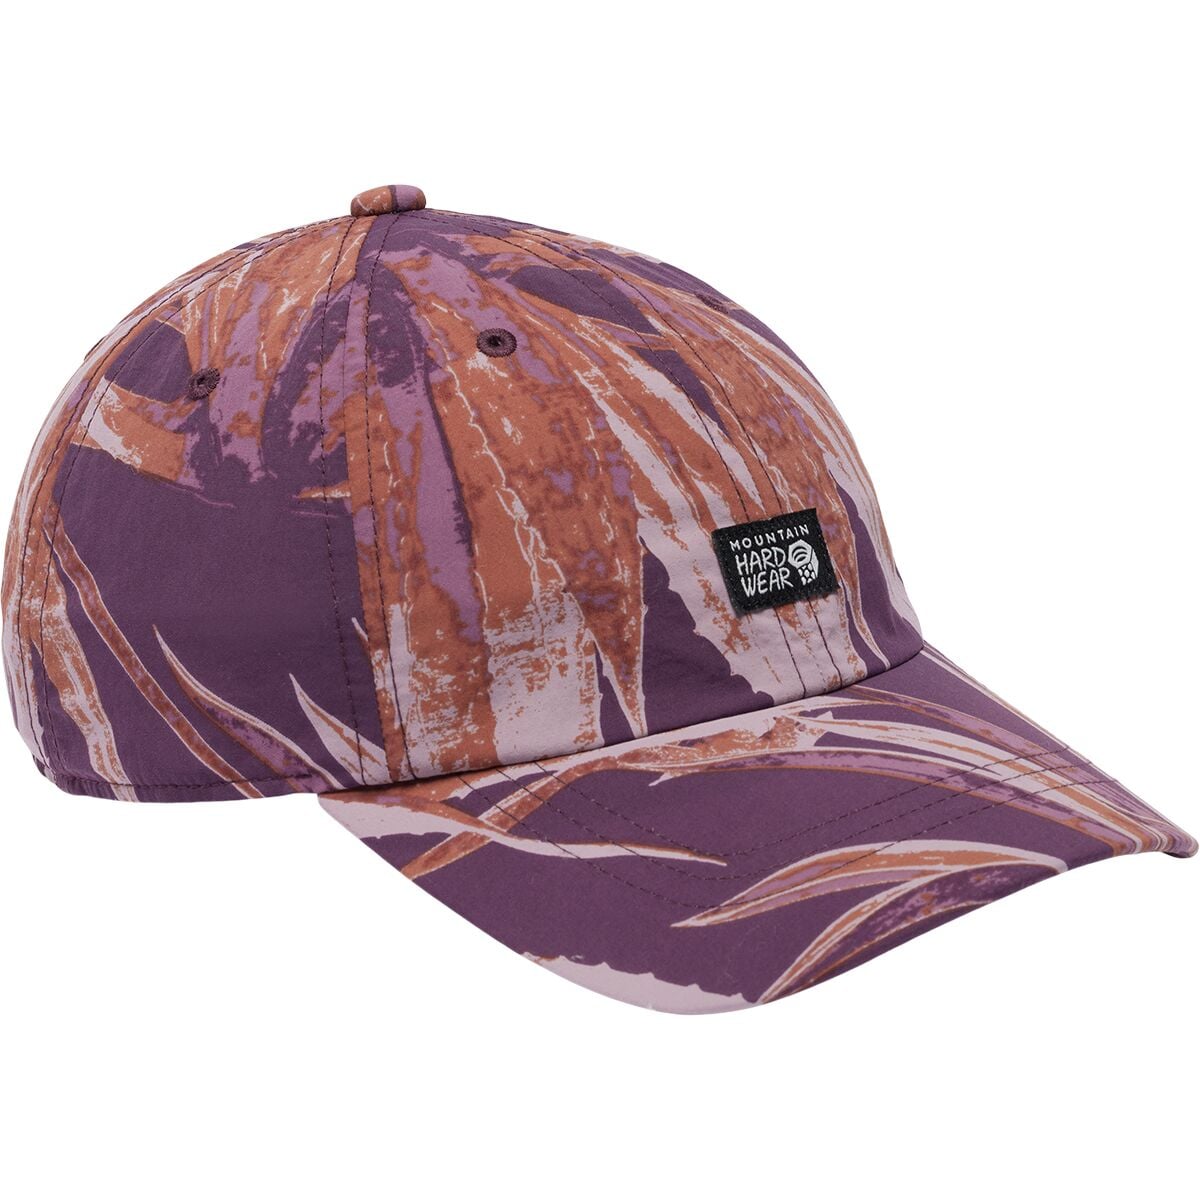 цена Страйдер трек кепка Mountain Hardwear, фиолетовый